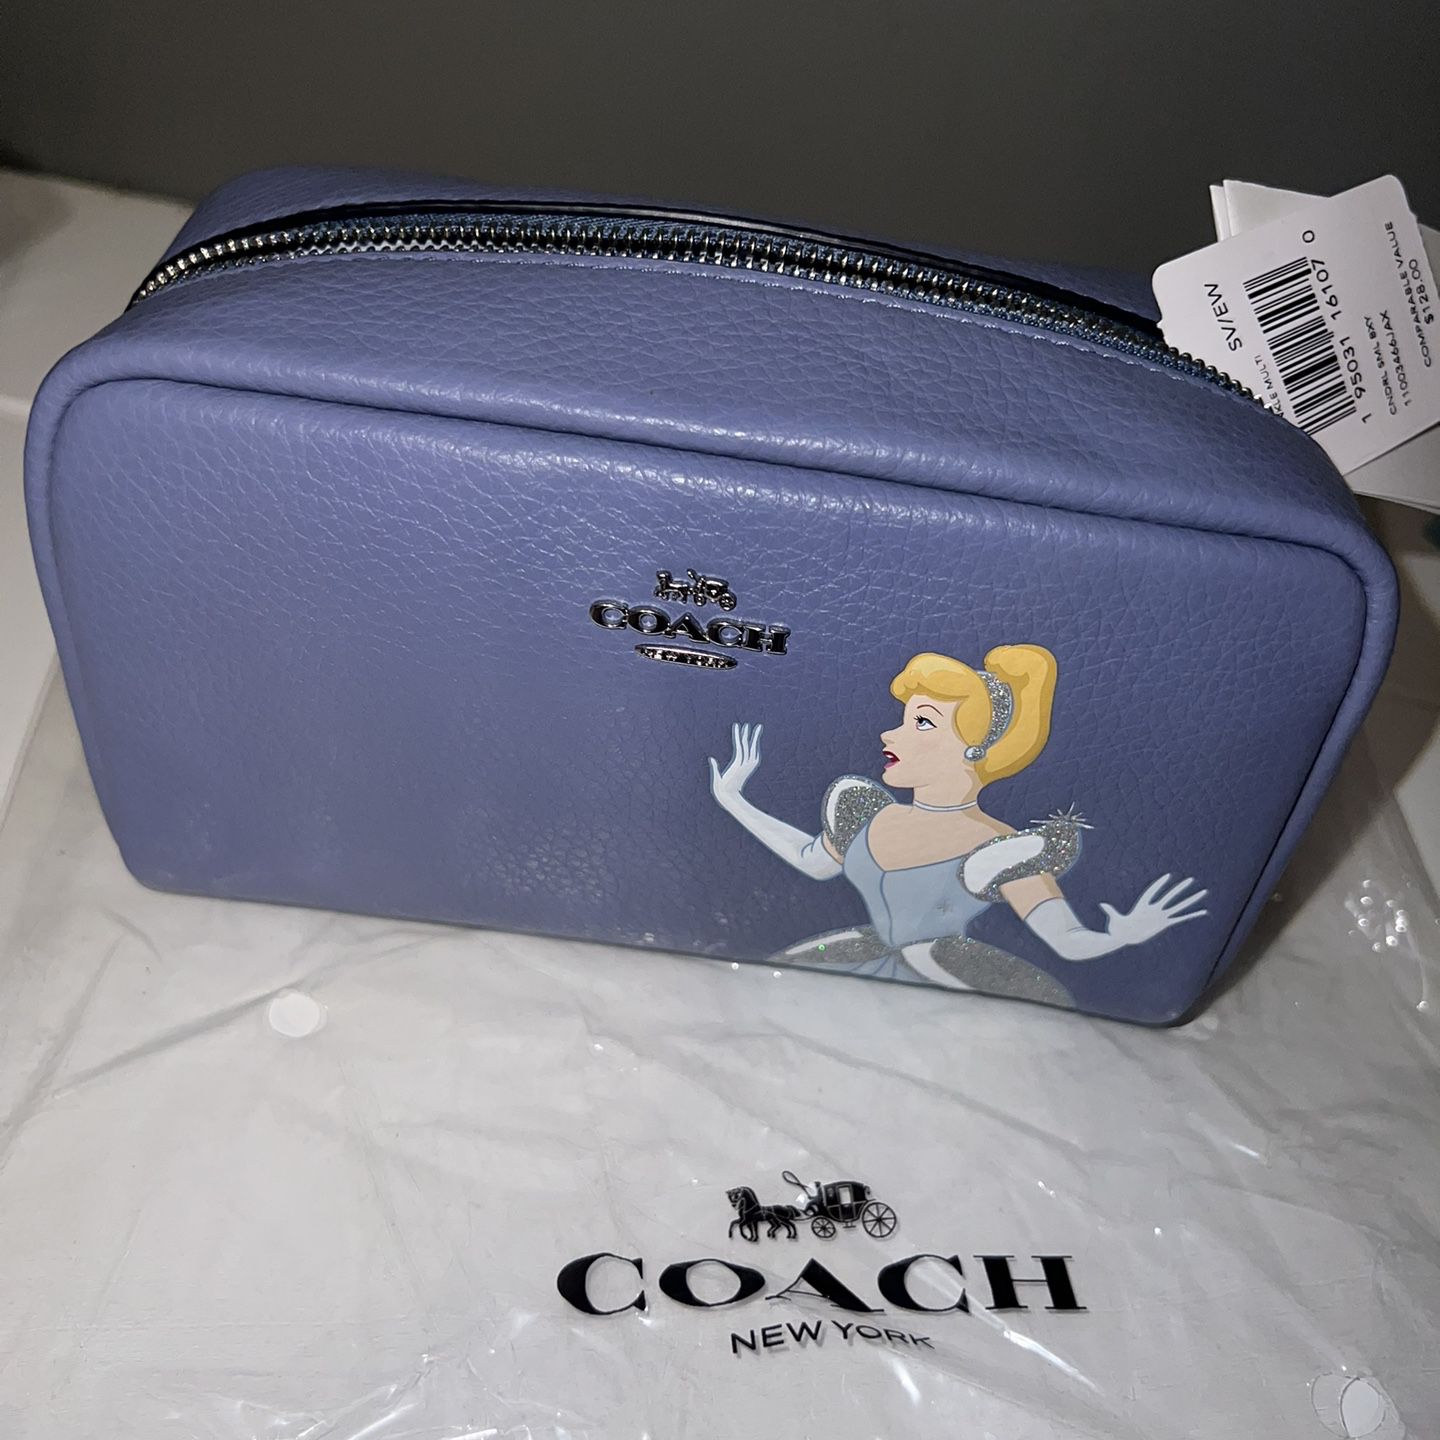  Coach Bag Disney 